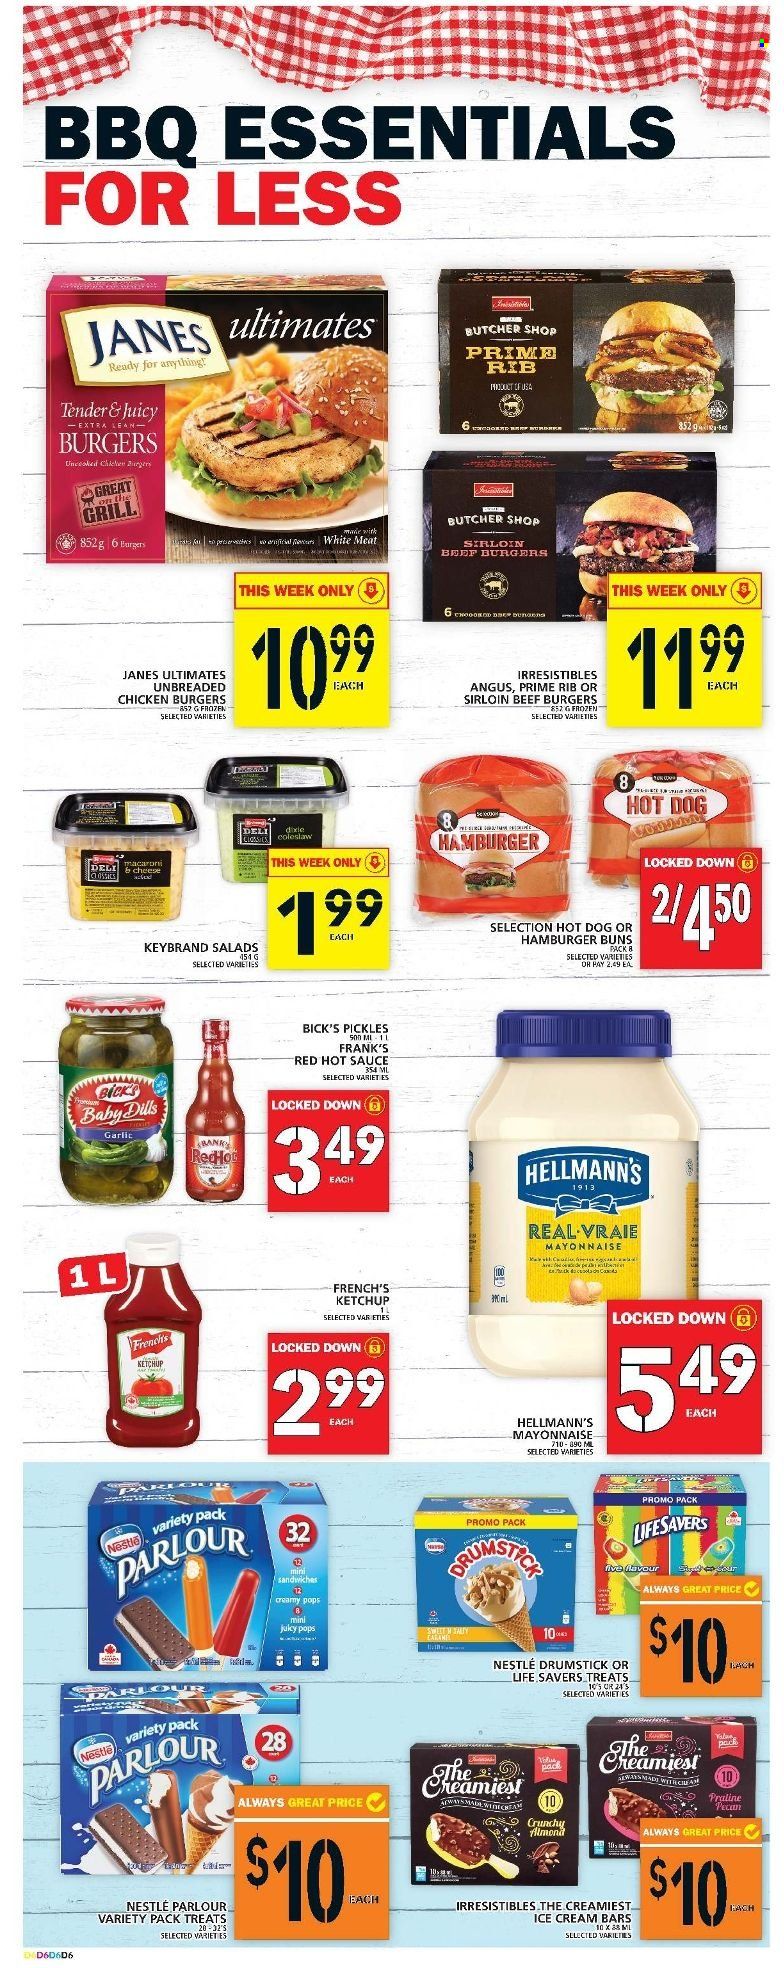 thumbnail - Food Basics Flyer - May 12, 2022 - May 18, 2022 - Sales products - buns, burger buns, garlic, coleslaw, hot dog, sandwich, macaroni, sauce, beef burger, mayonnaise, Hellmann’s, ice cream, ice cream bars, pickles, hot sauce, Nestlé, ketchup. Page 7.